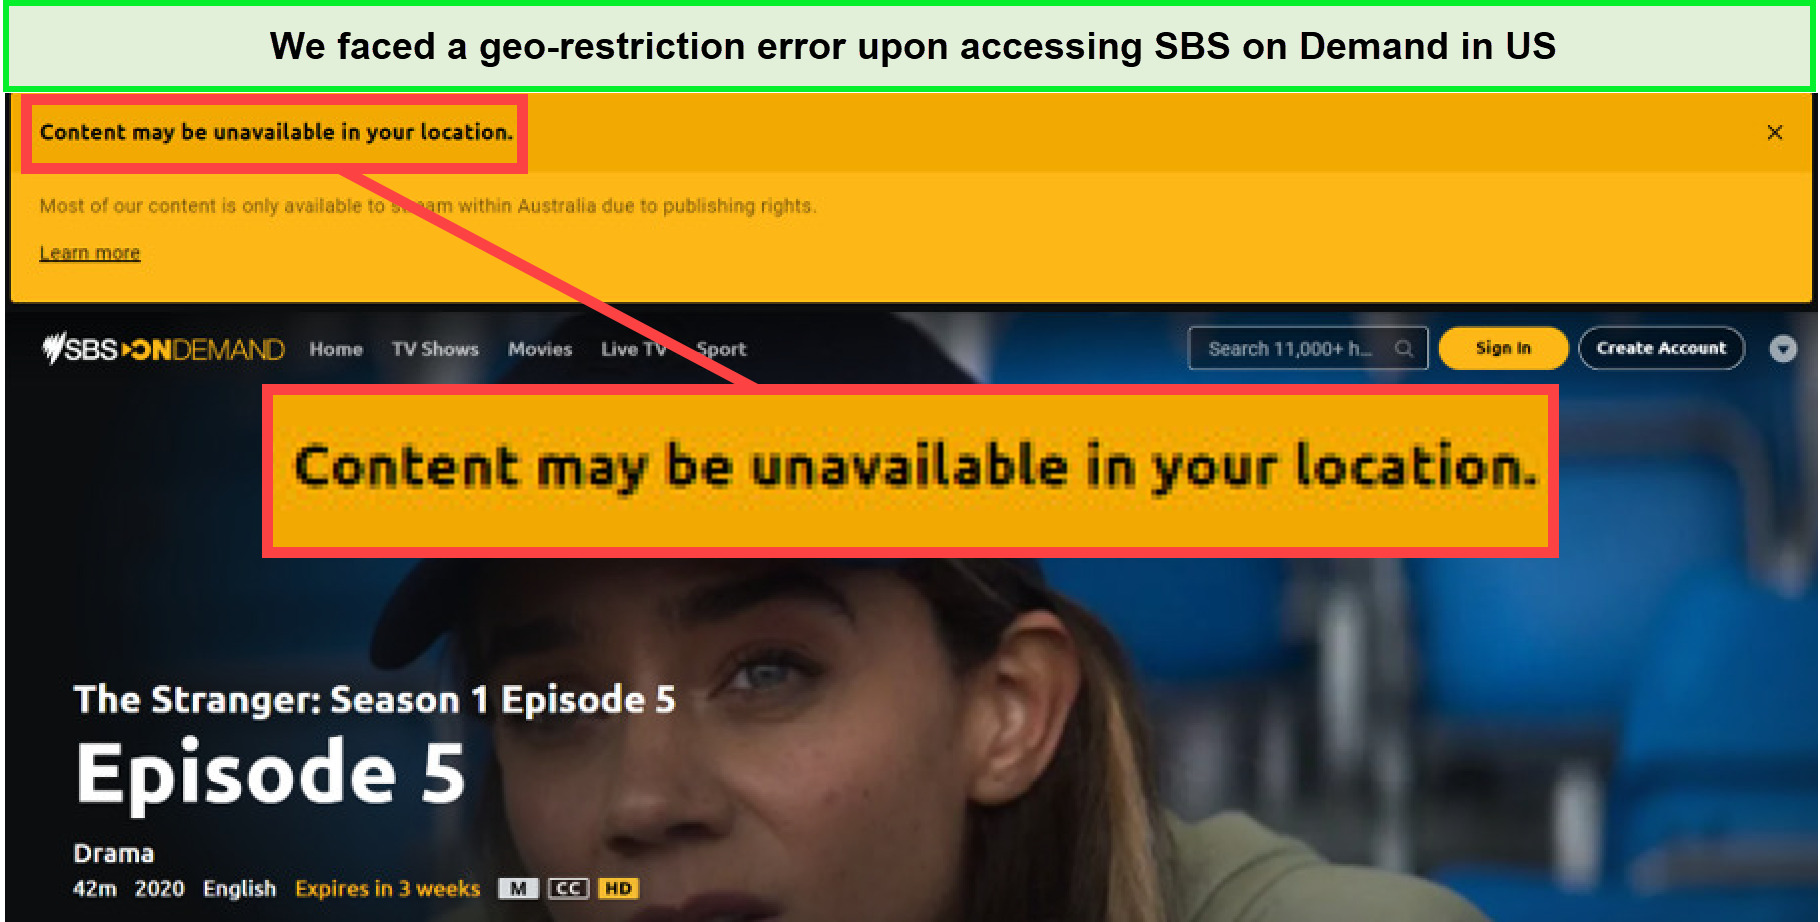 sbs-on-demand-geo-restriction-error